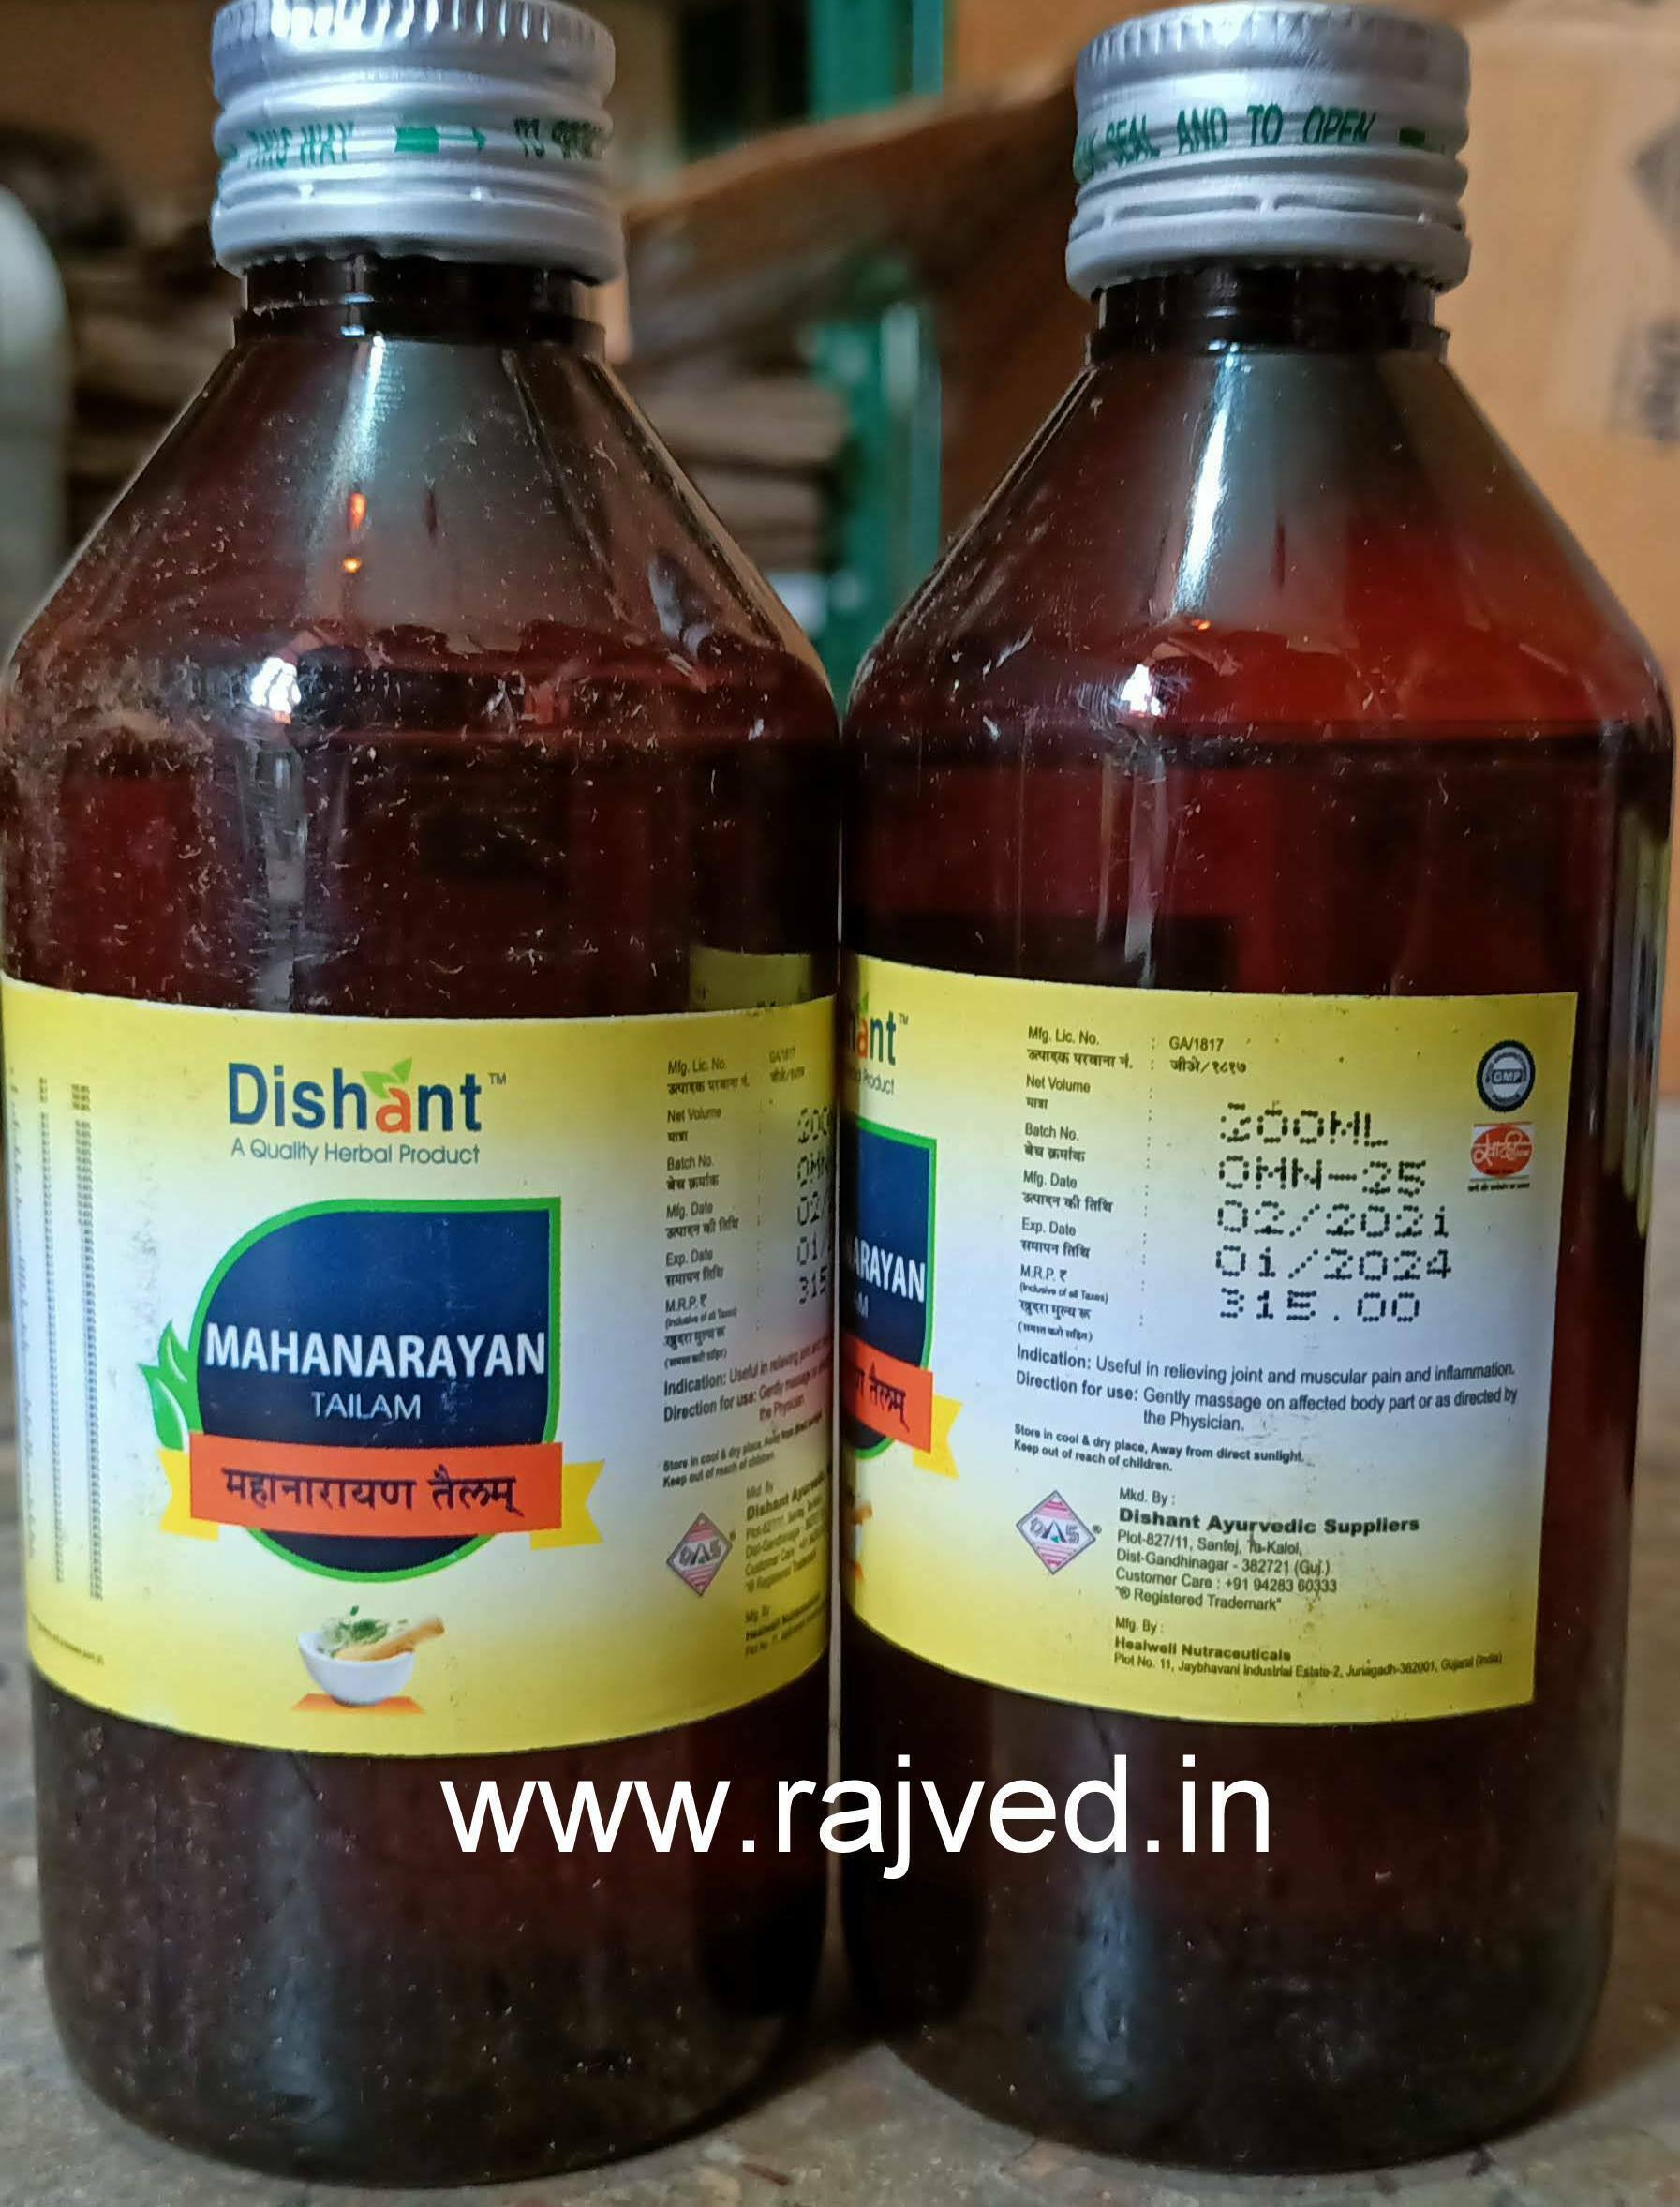 mahanarayan tailam 200 ml dishant ayurvedic suppliers